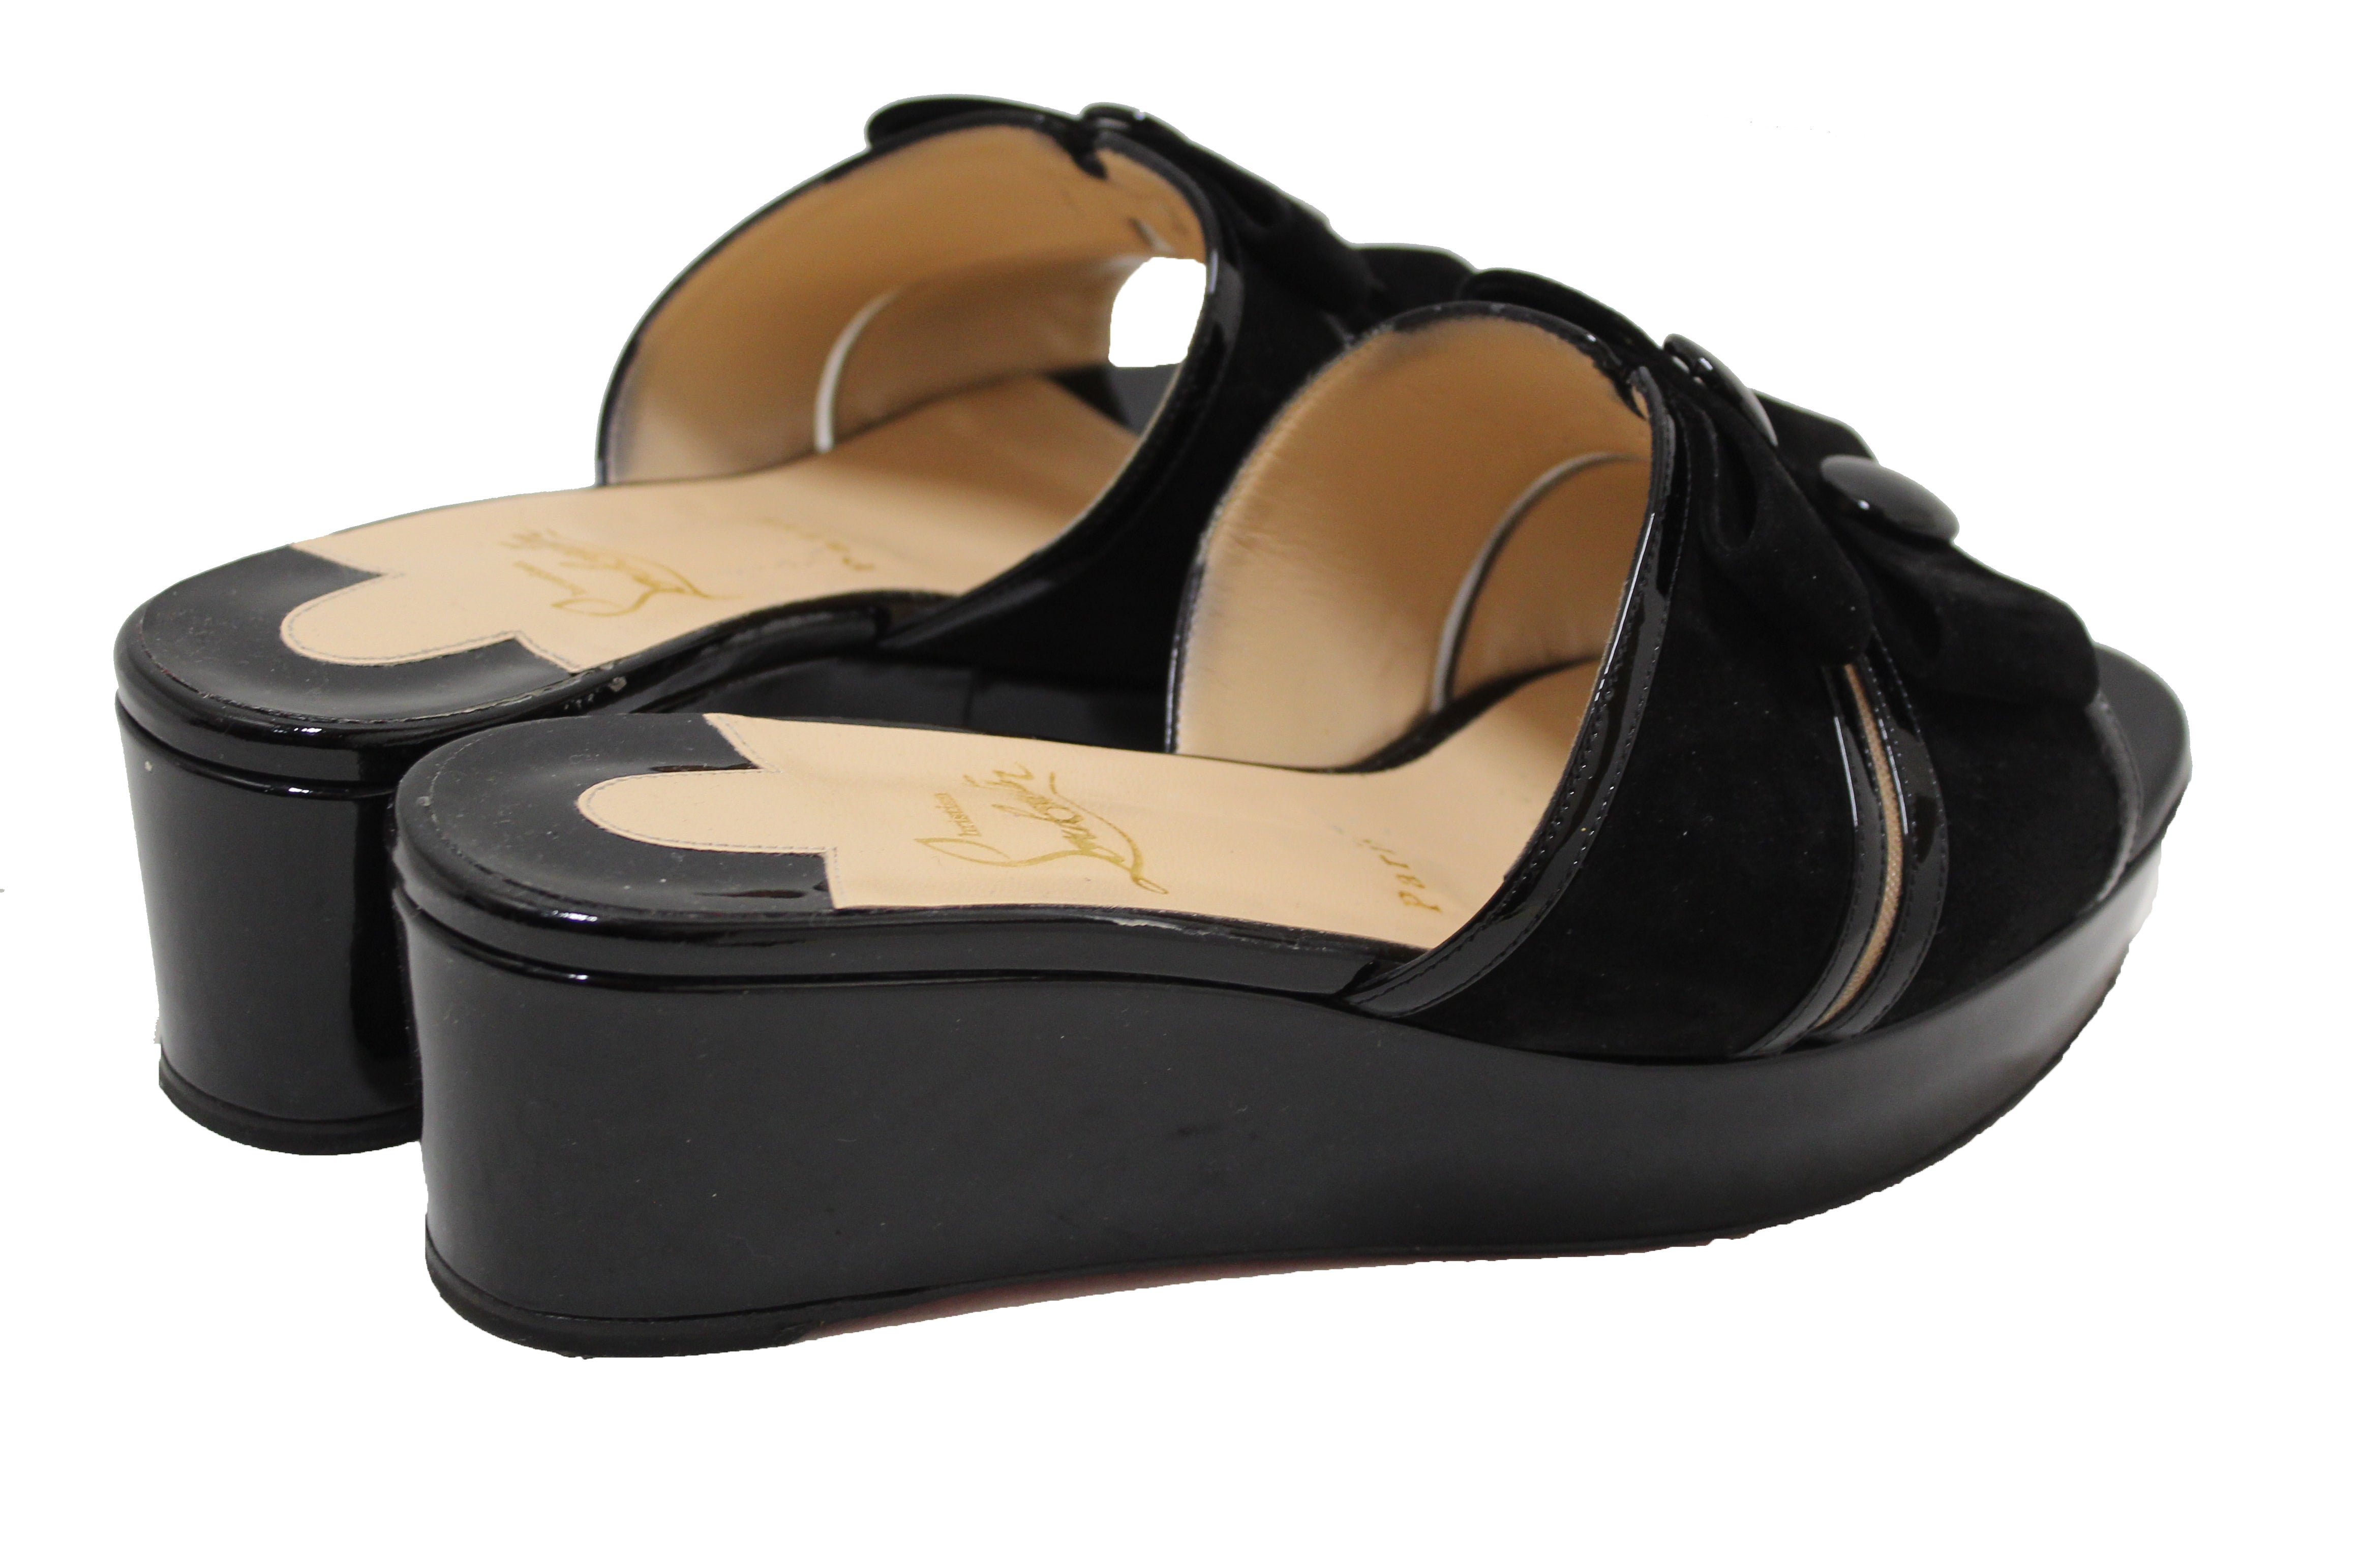 Authentic Christian Dior Black Patent Leather Daisy Doll Platform Sandals Shoes Size 40